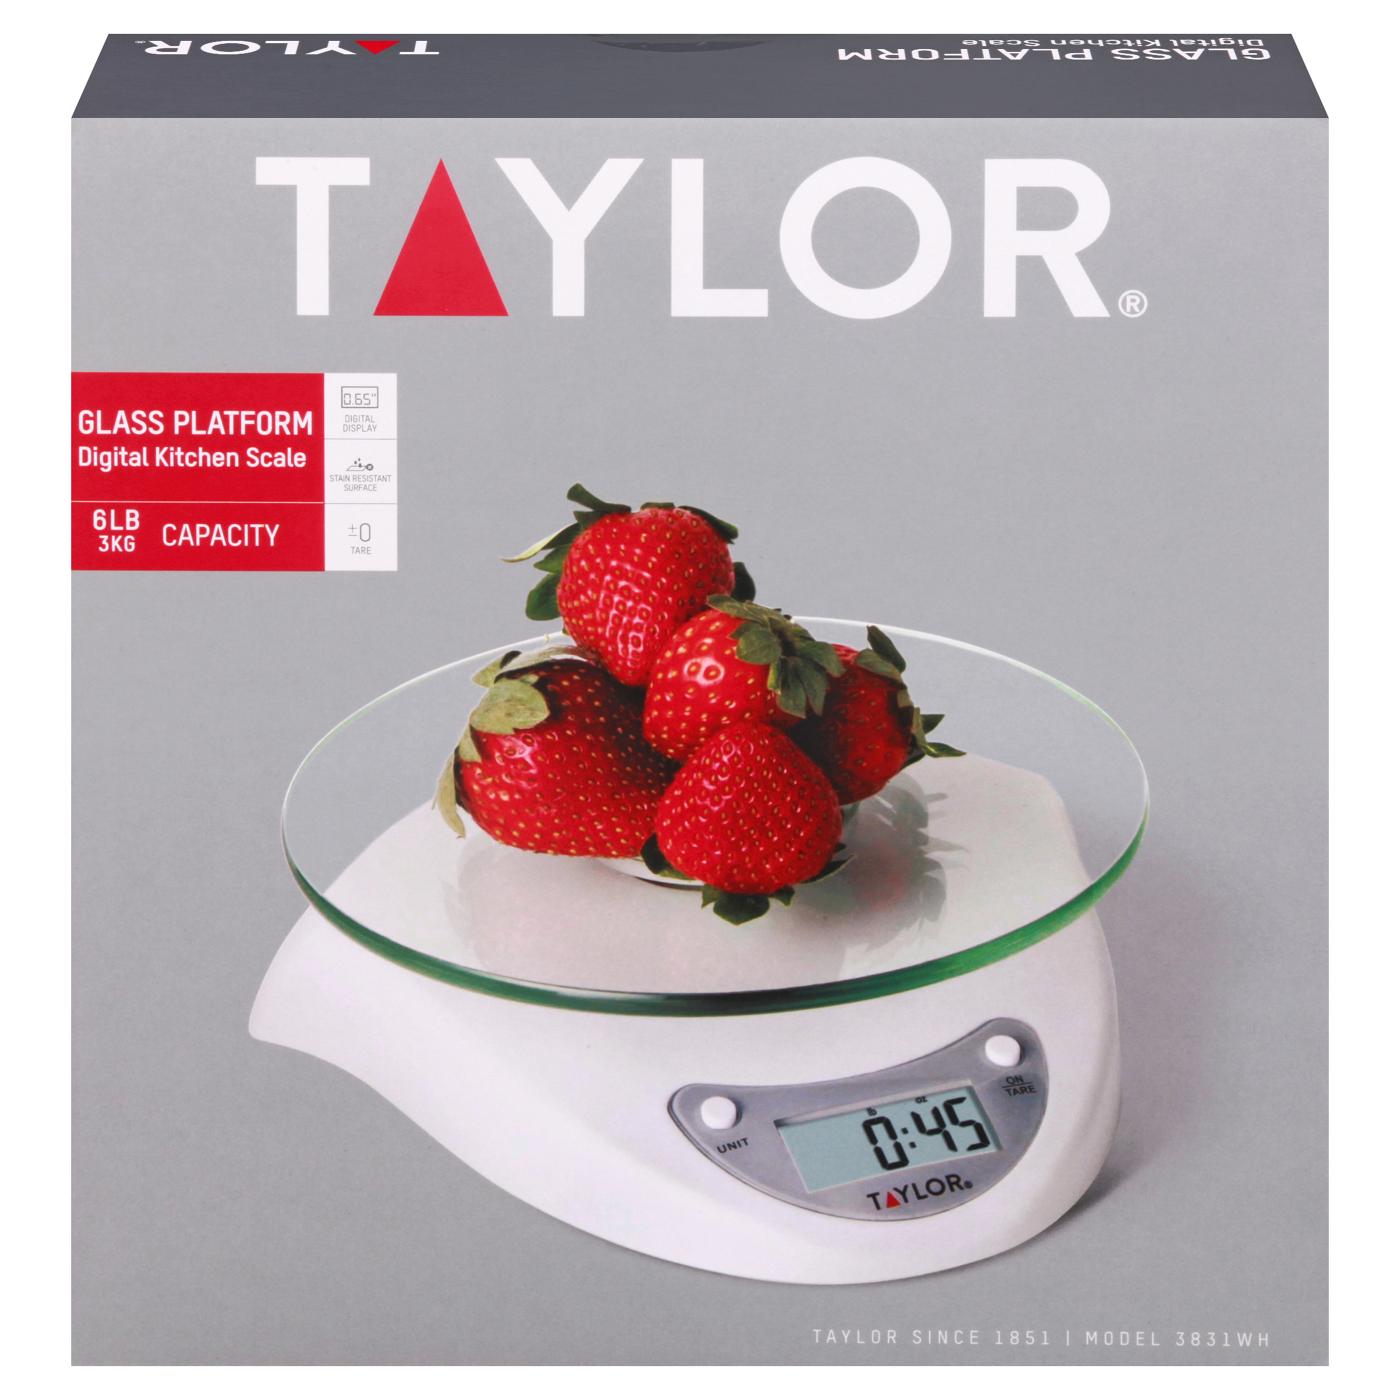 Taylor Glass Platform Digital Kitchen Scale - White; image 1 of 5